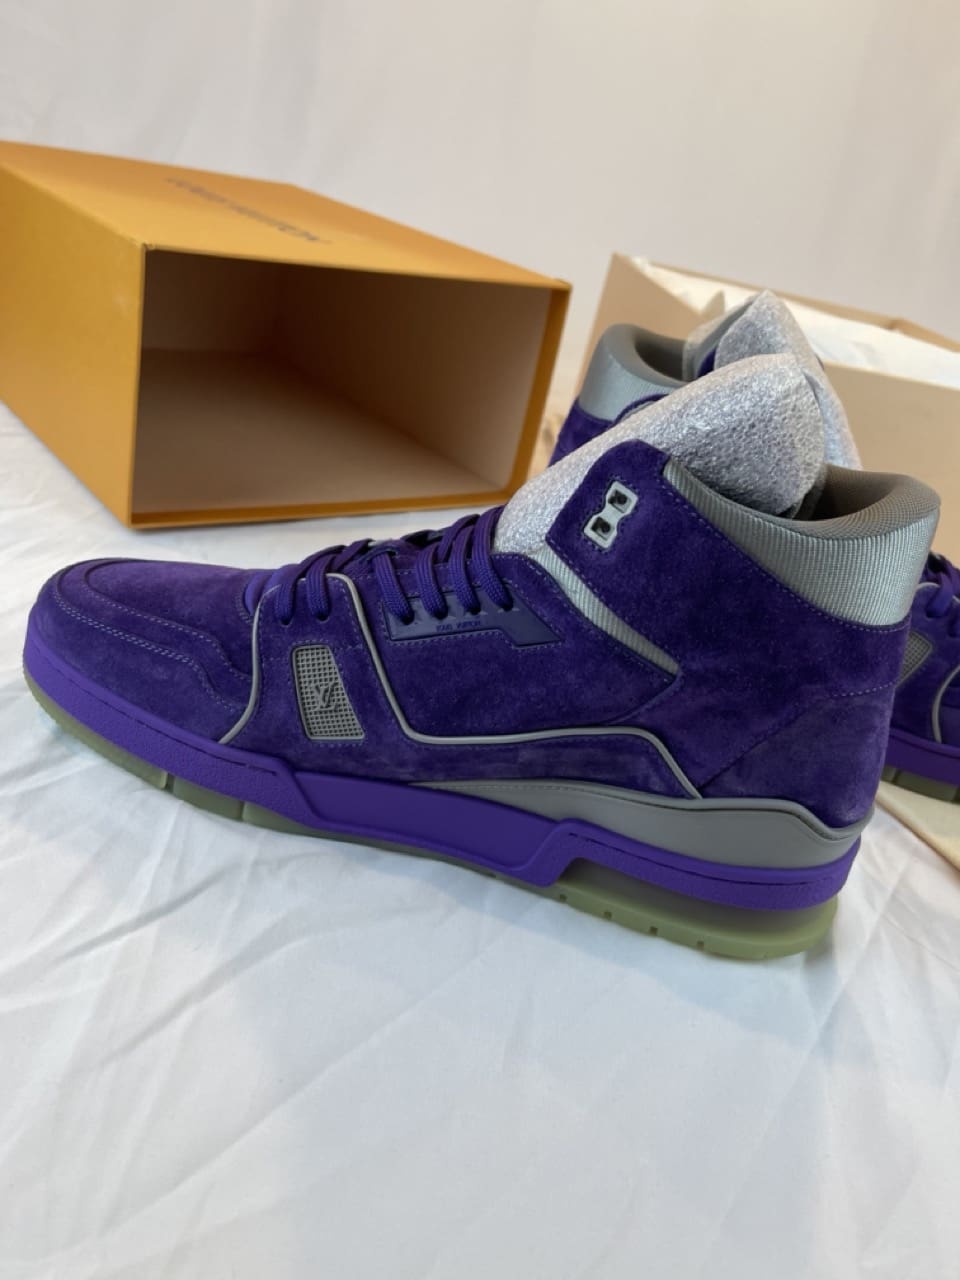 Louis Vuitton Purple Sneakers - For Sale on 1stDibs